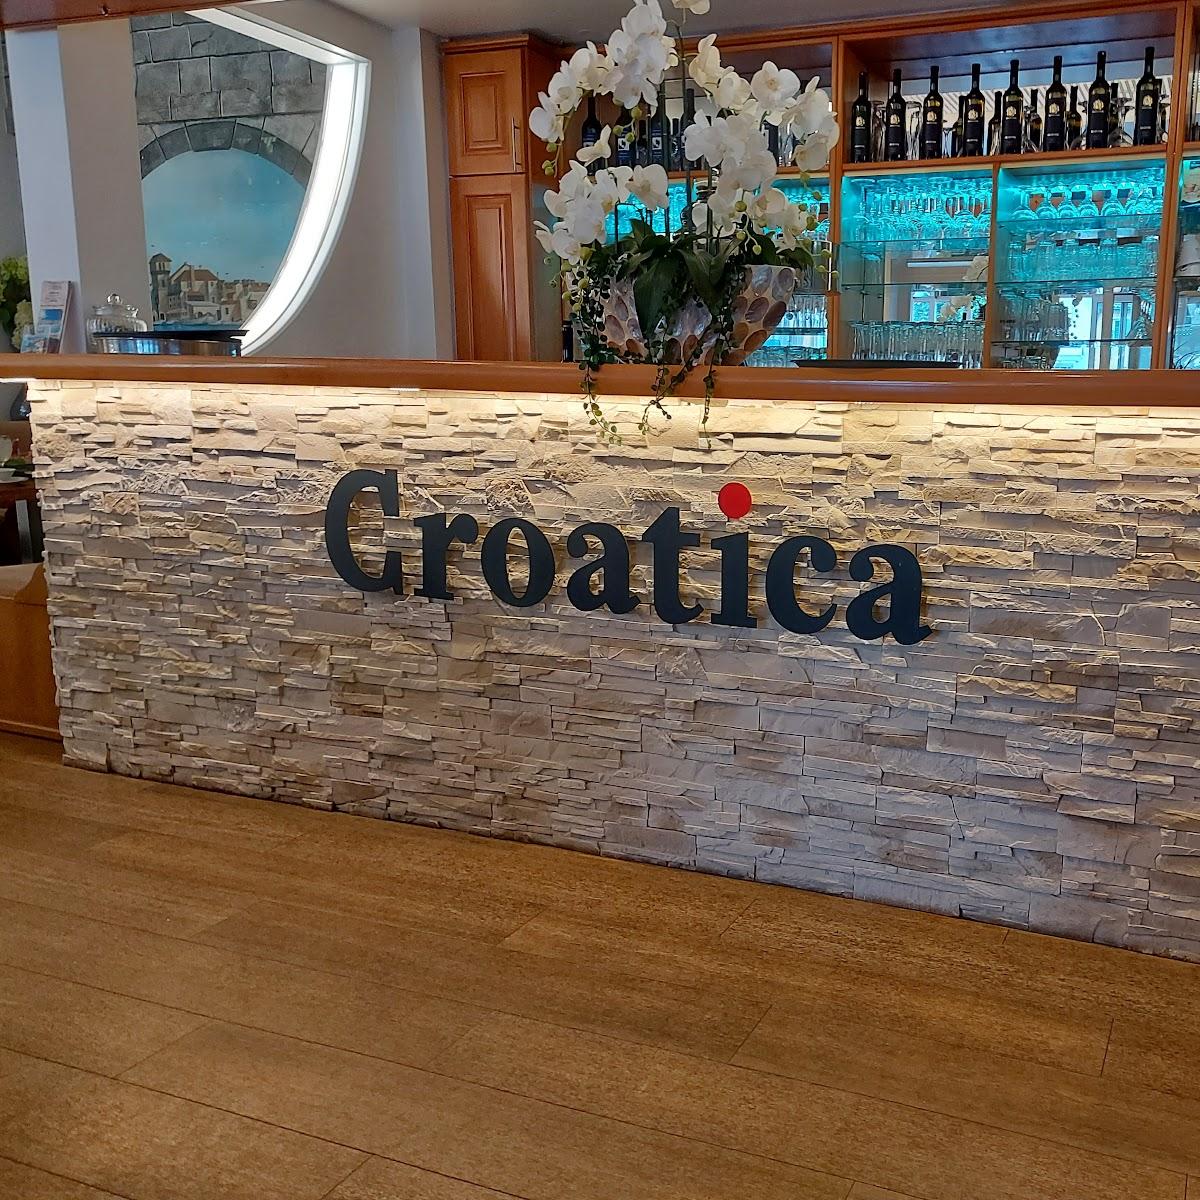 Restaurant "Croatica Grillrestaurant" in München